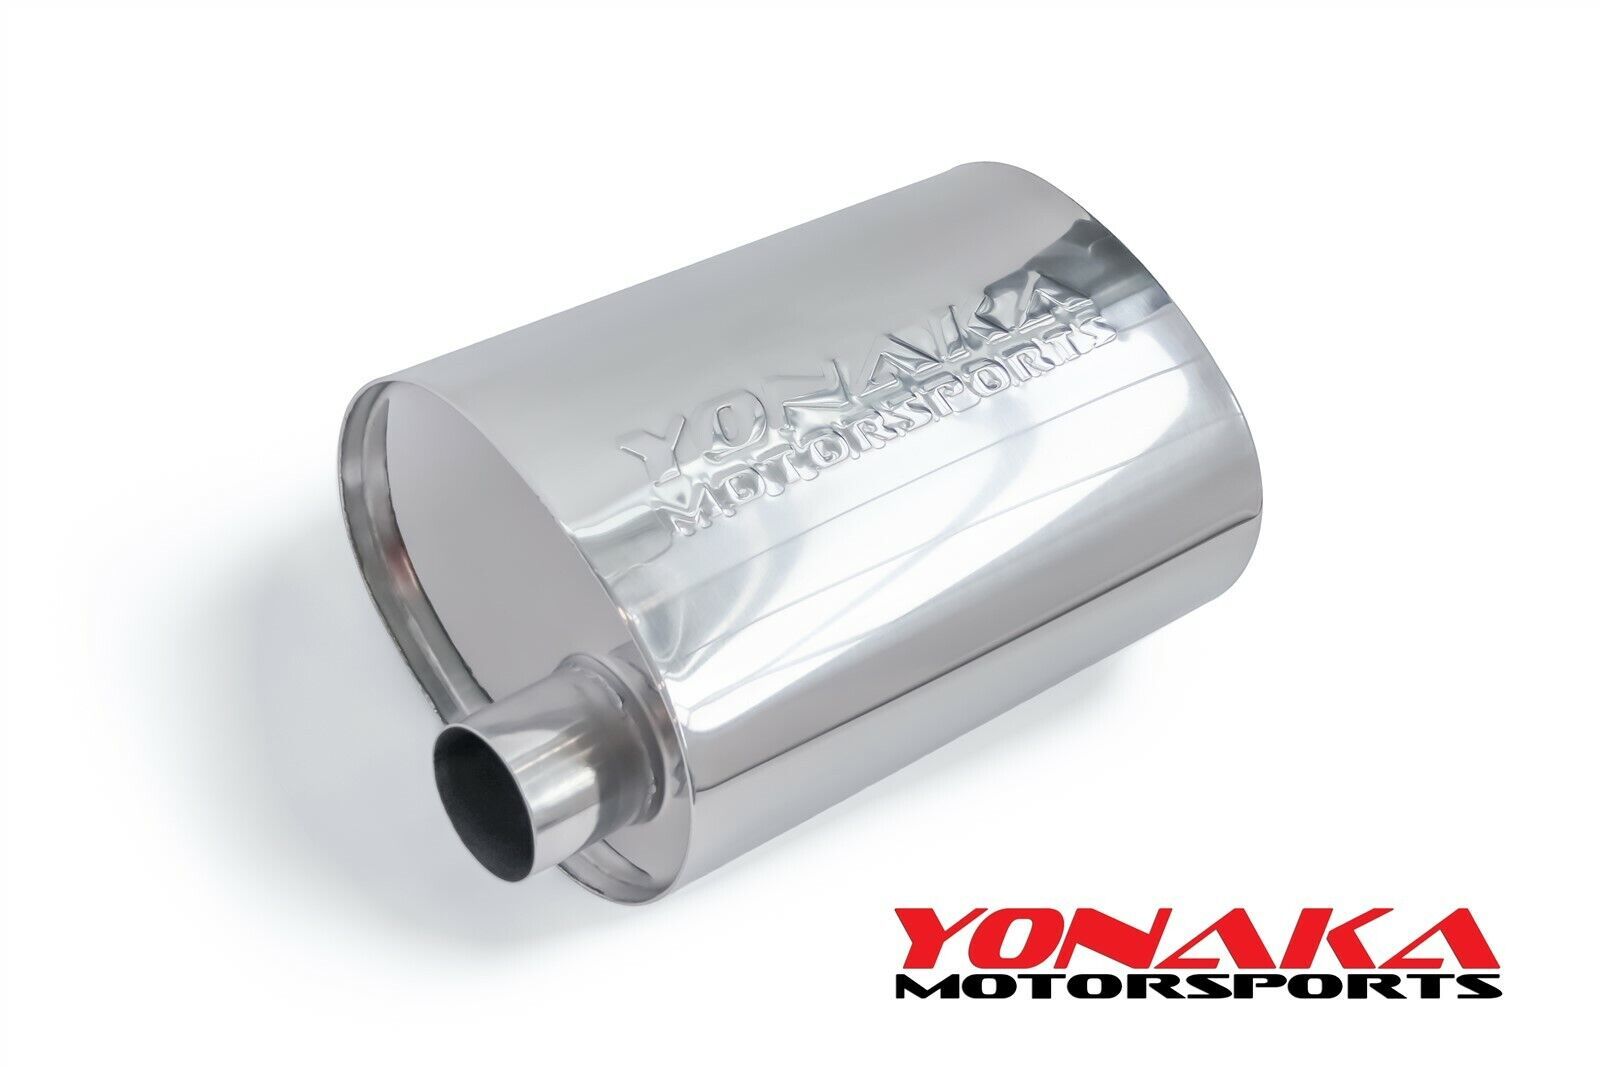 Yonaka Motorsports 2.5" Performance Muffler T304 Stainless Steel High Flow Logo - $154.69